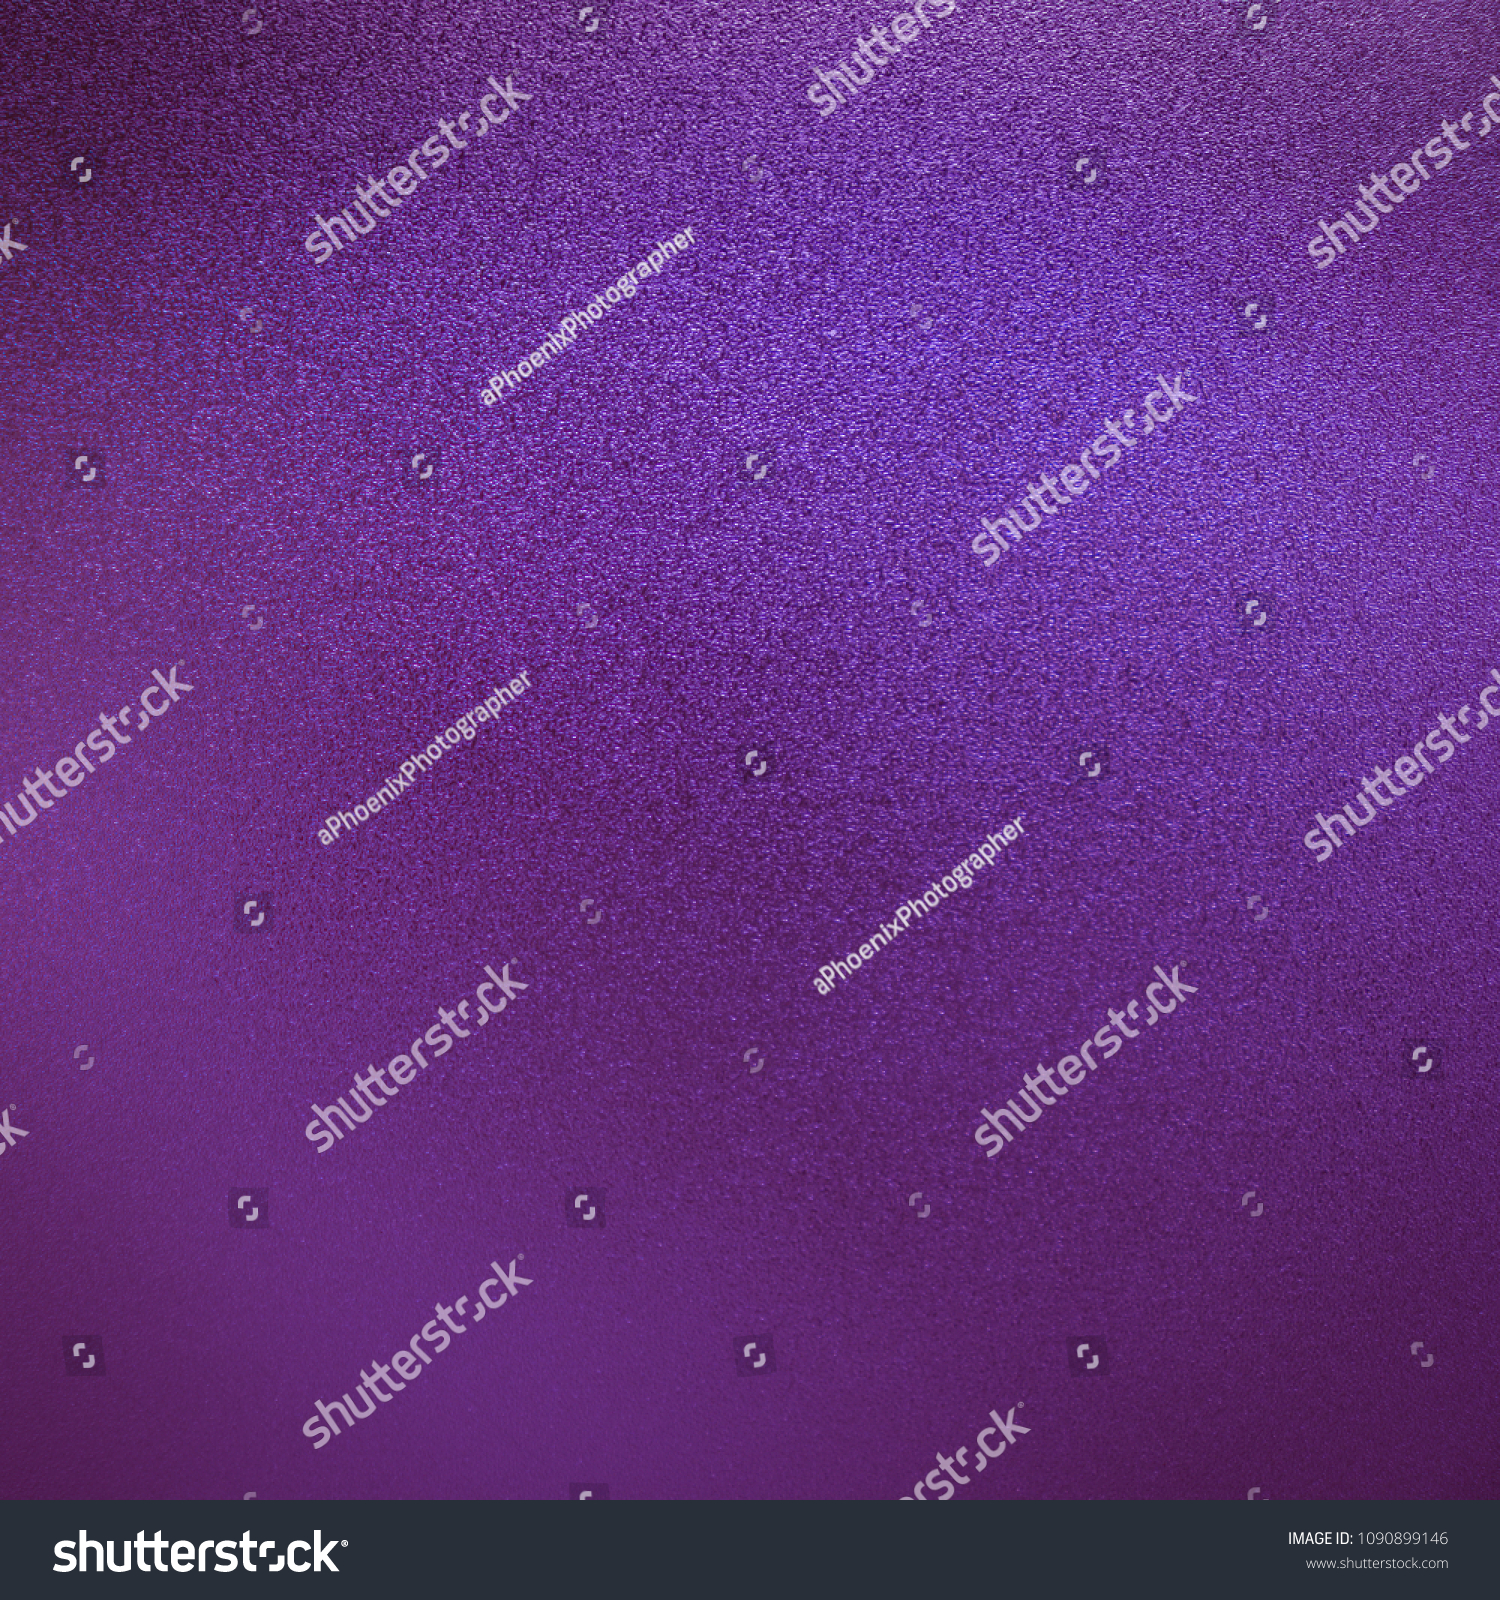 Glitter purple background, Glitter texture. #1090899146